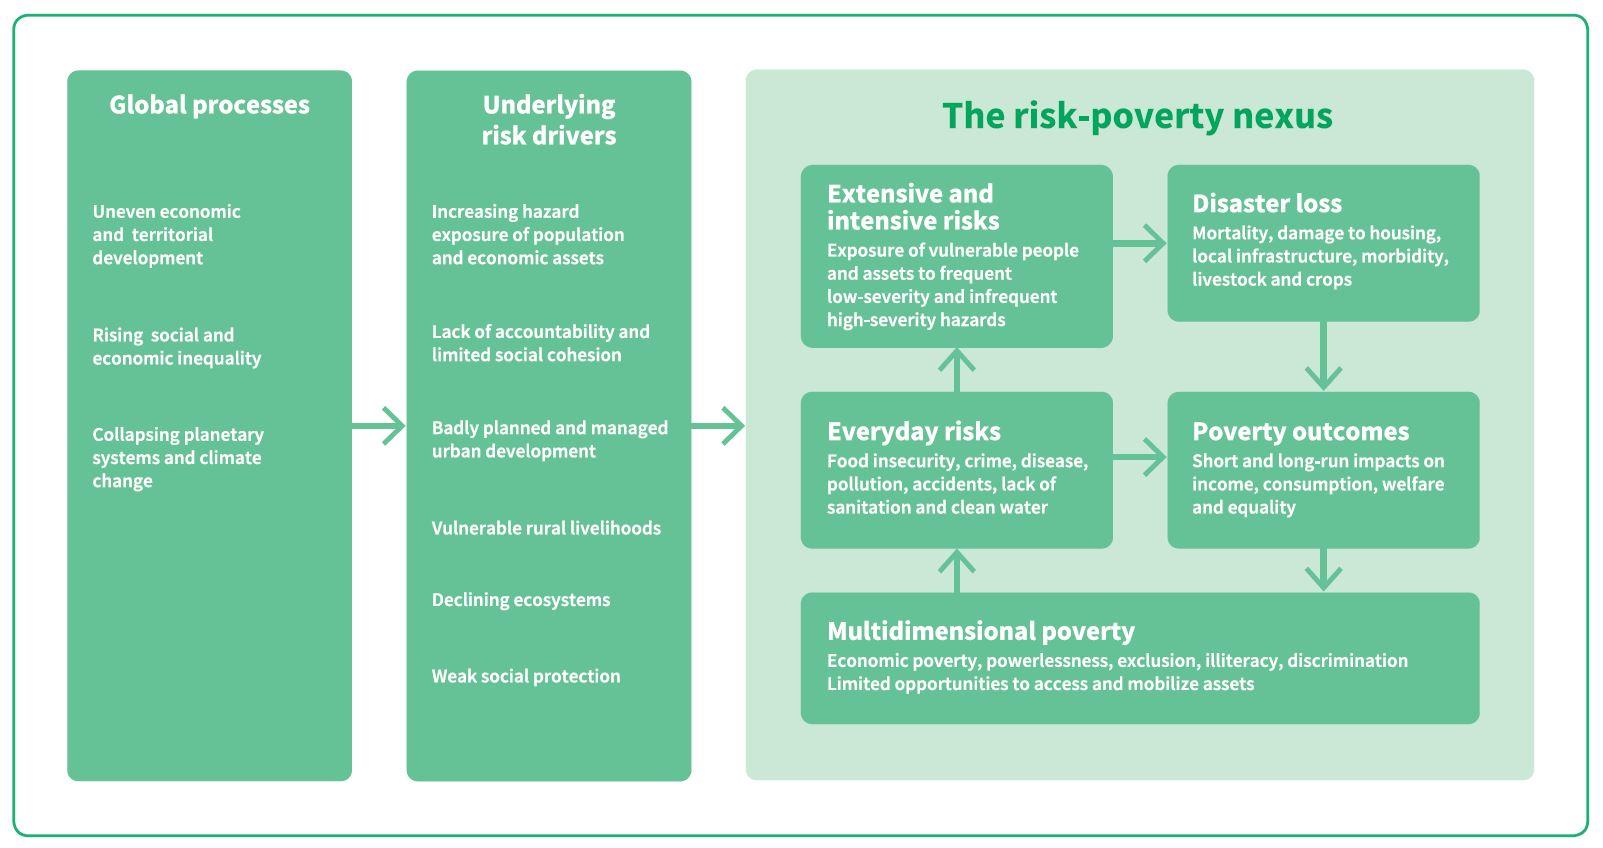 Disaster-poverty nexus - GAR 2015, UNDRR